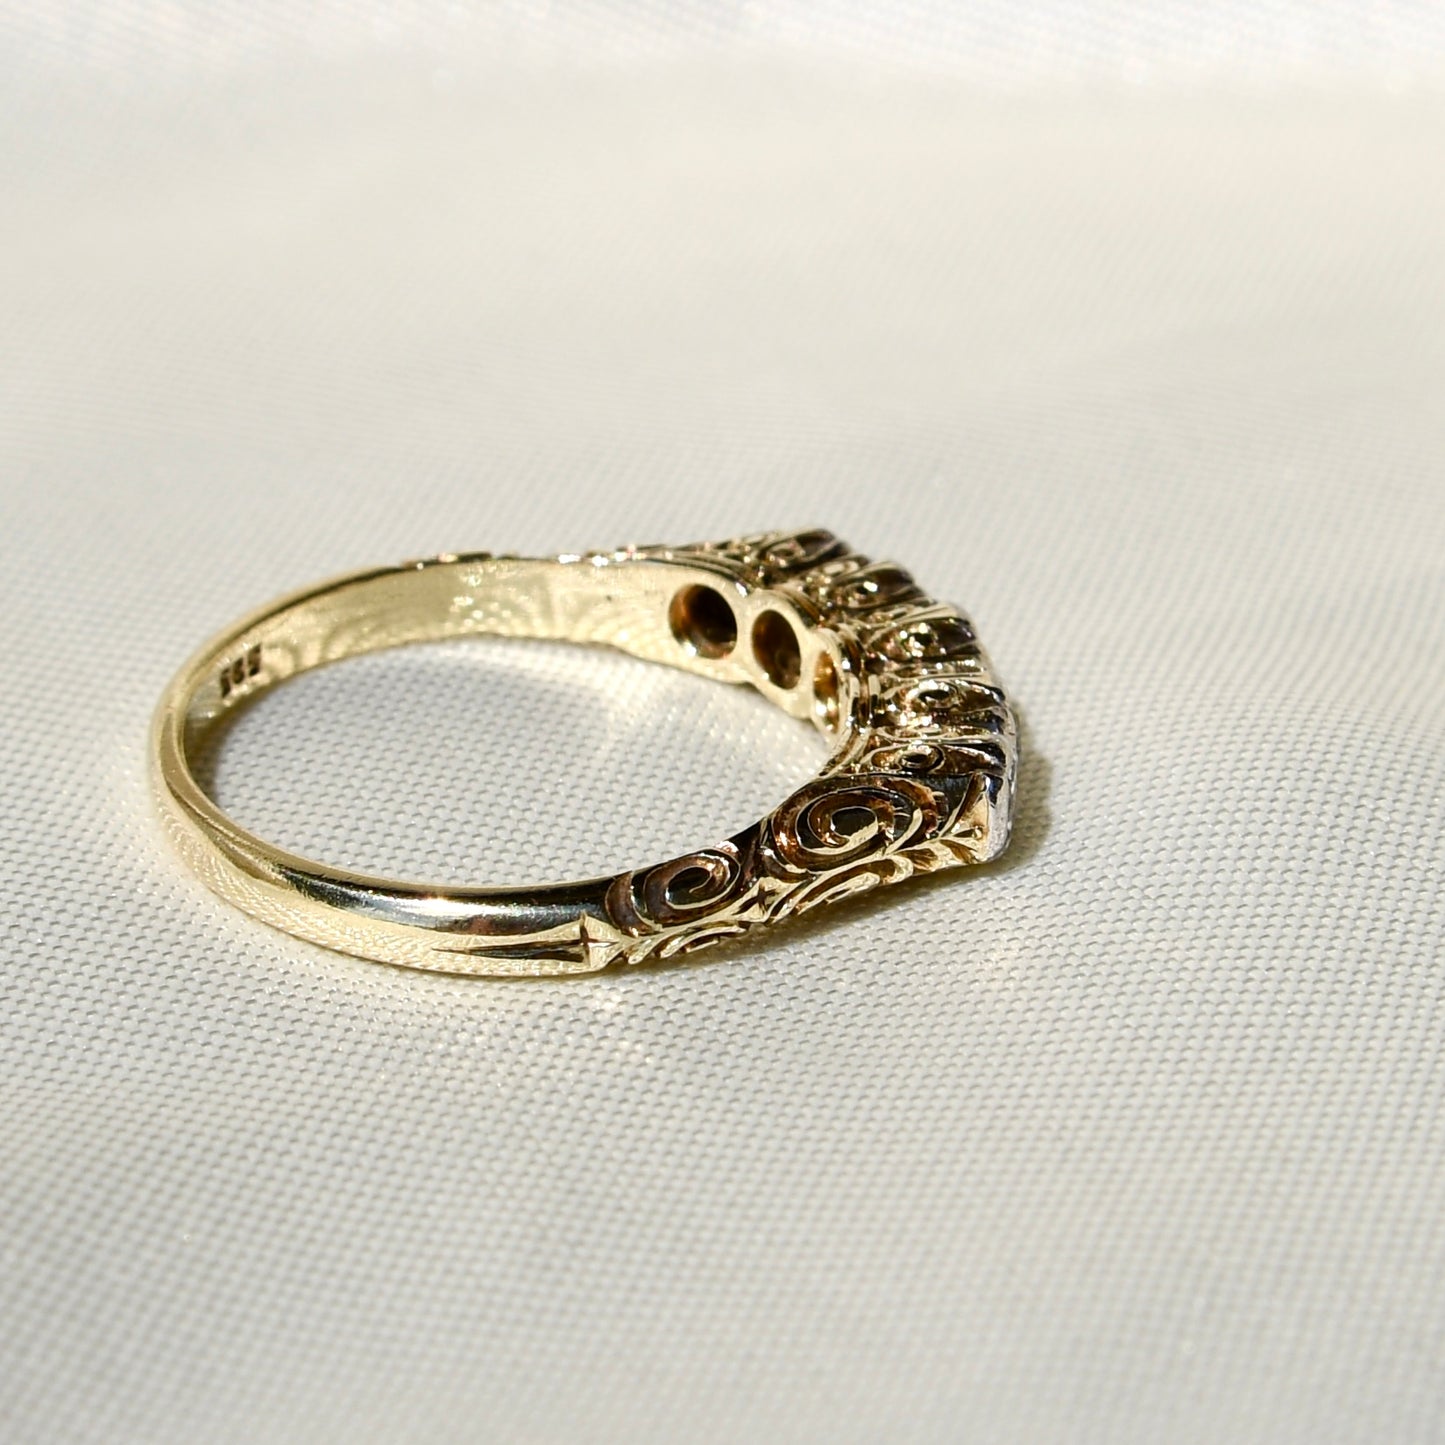 Antique 0.50ct transitional cut diamond five stone ring